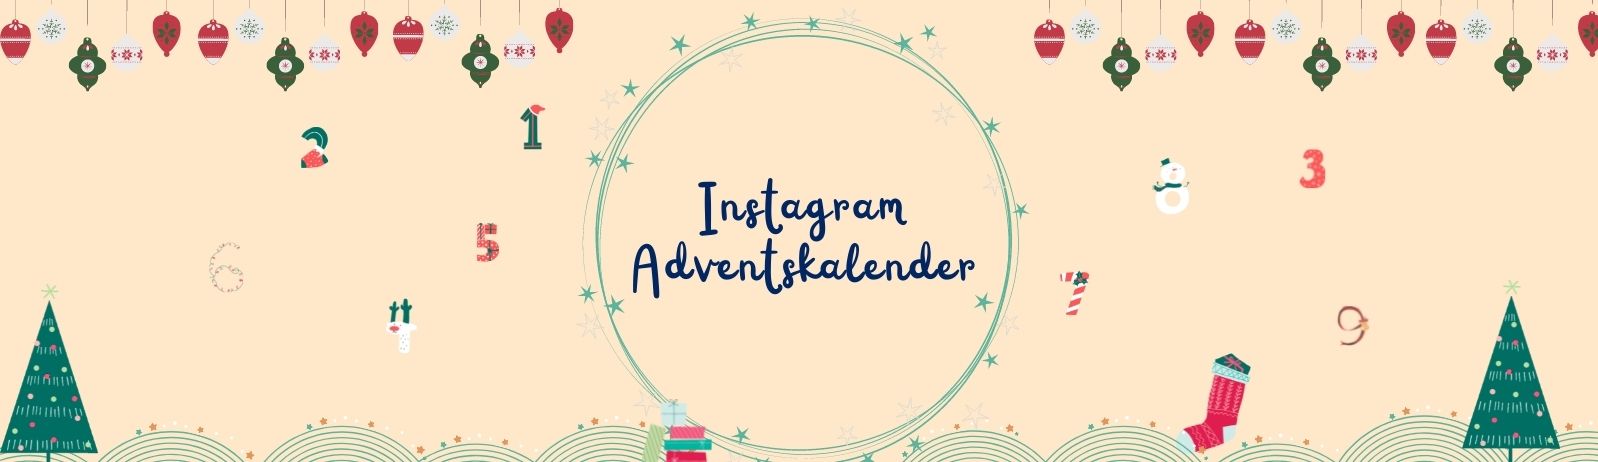 Instagram Adventskalender_slider